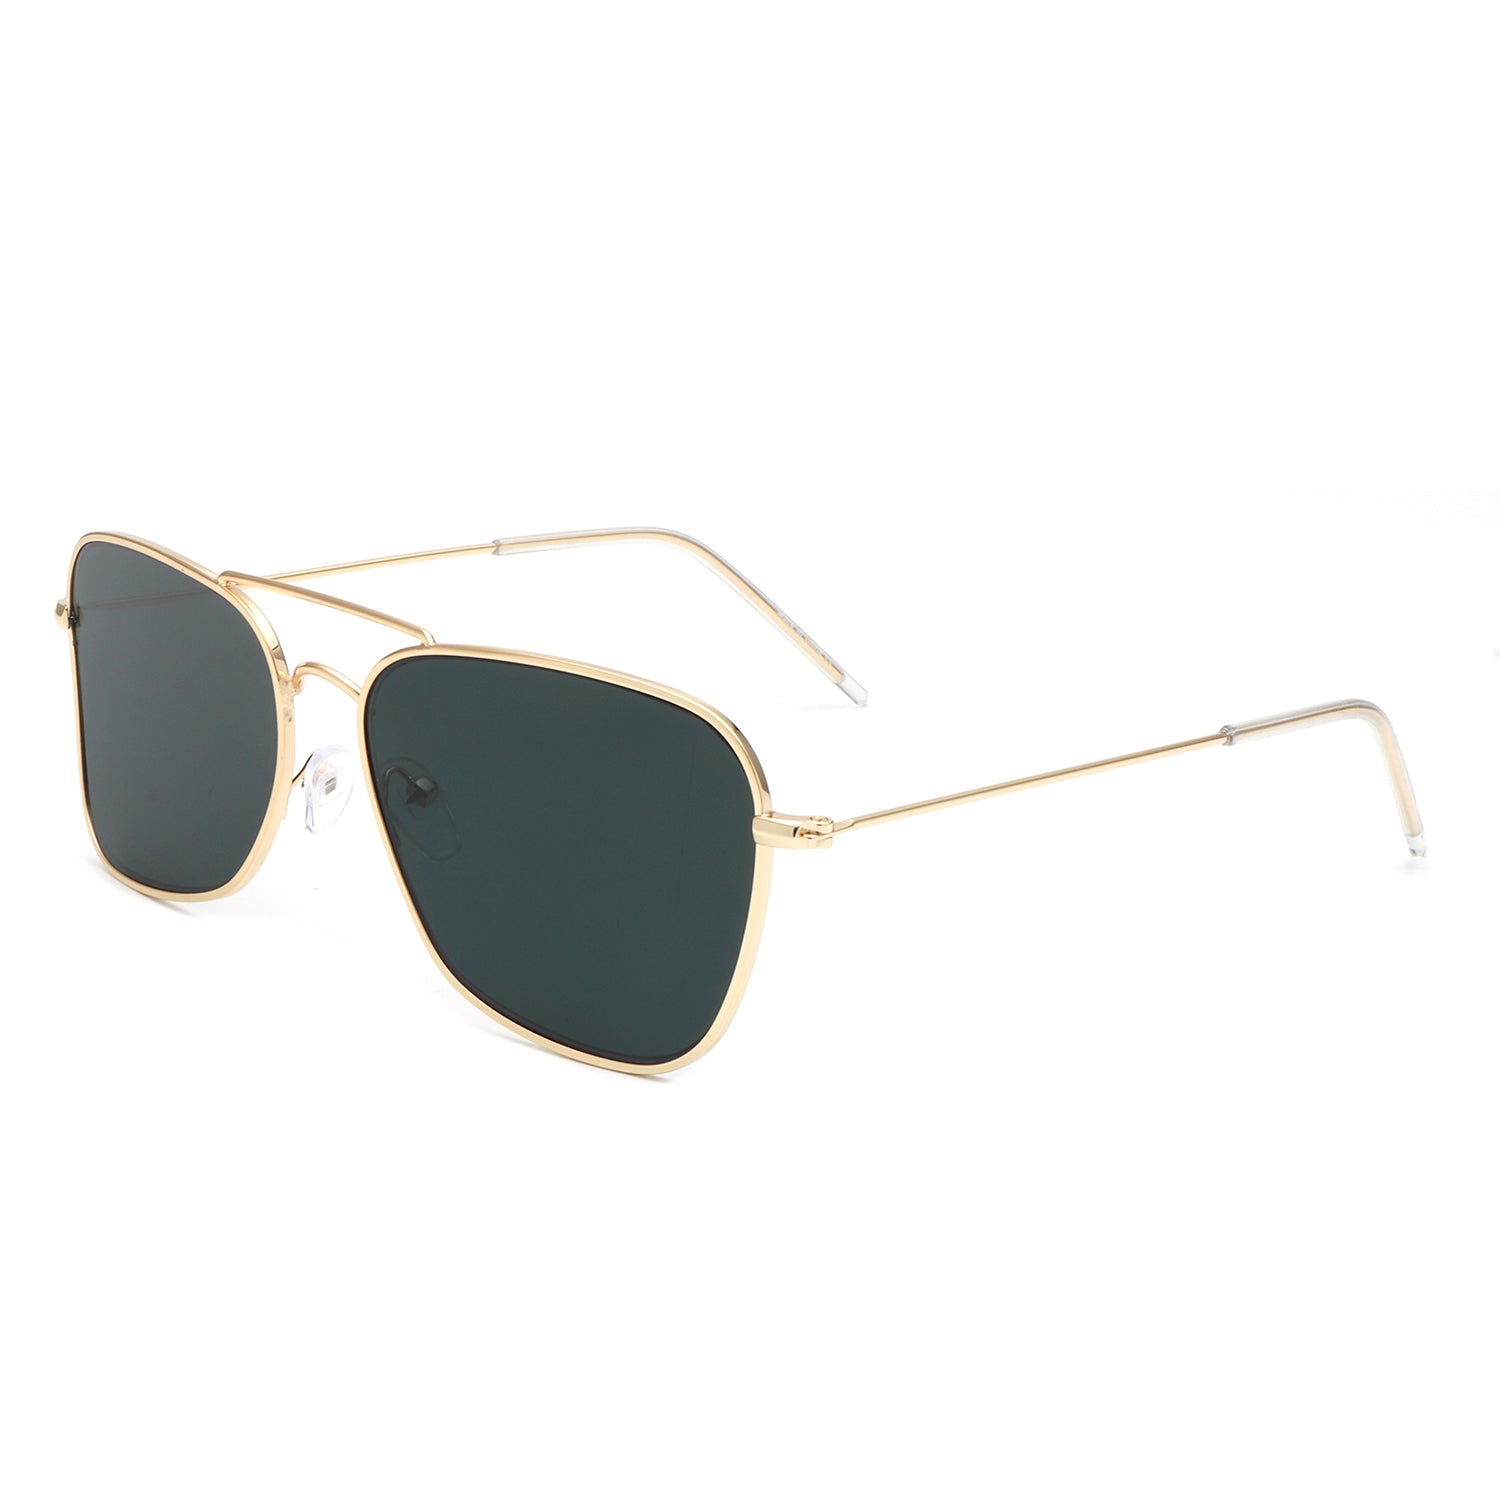 J1007 - Square Brow-Bar Geometric Fashion Wholesale Sunglasses